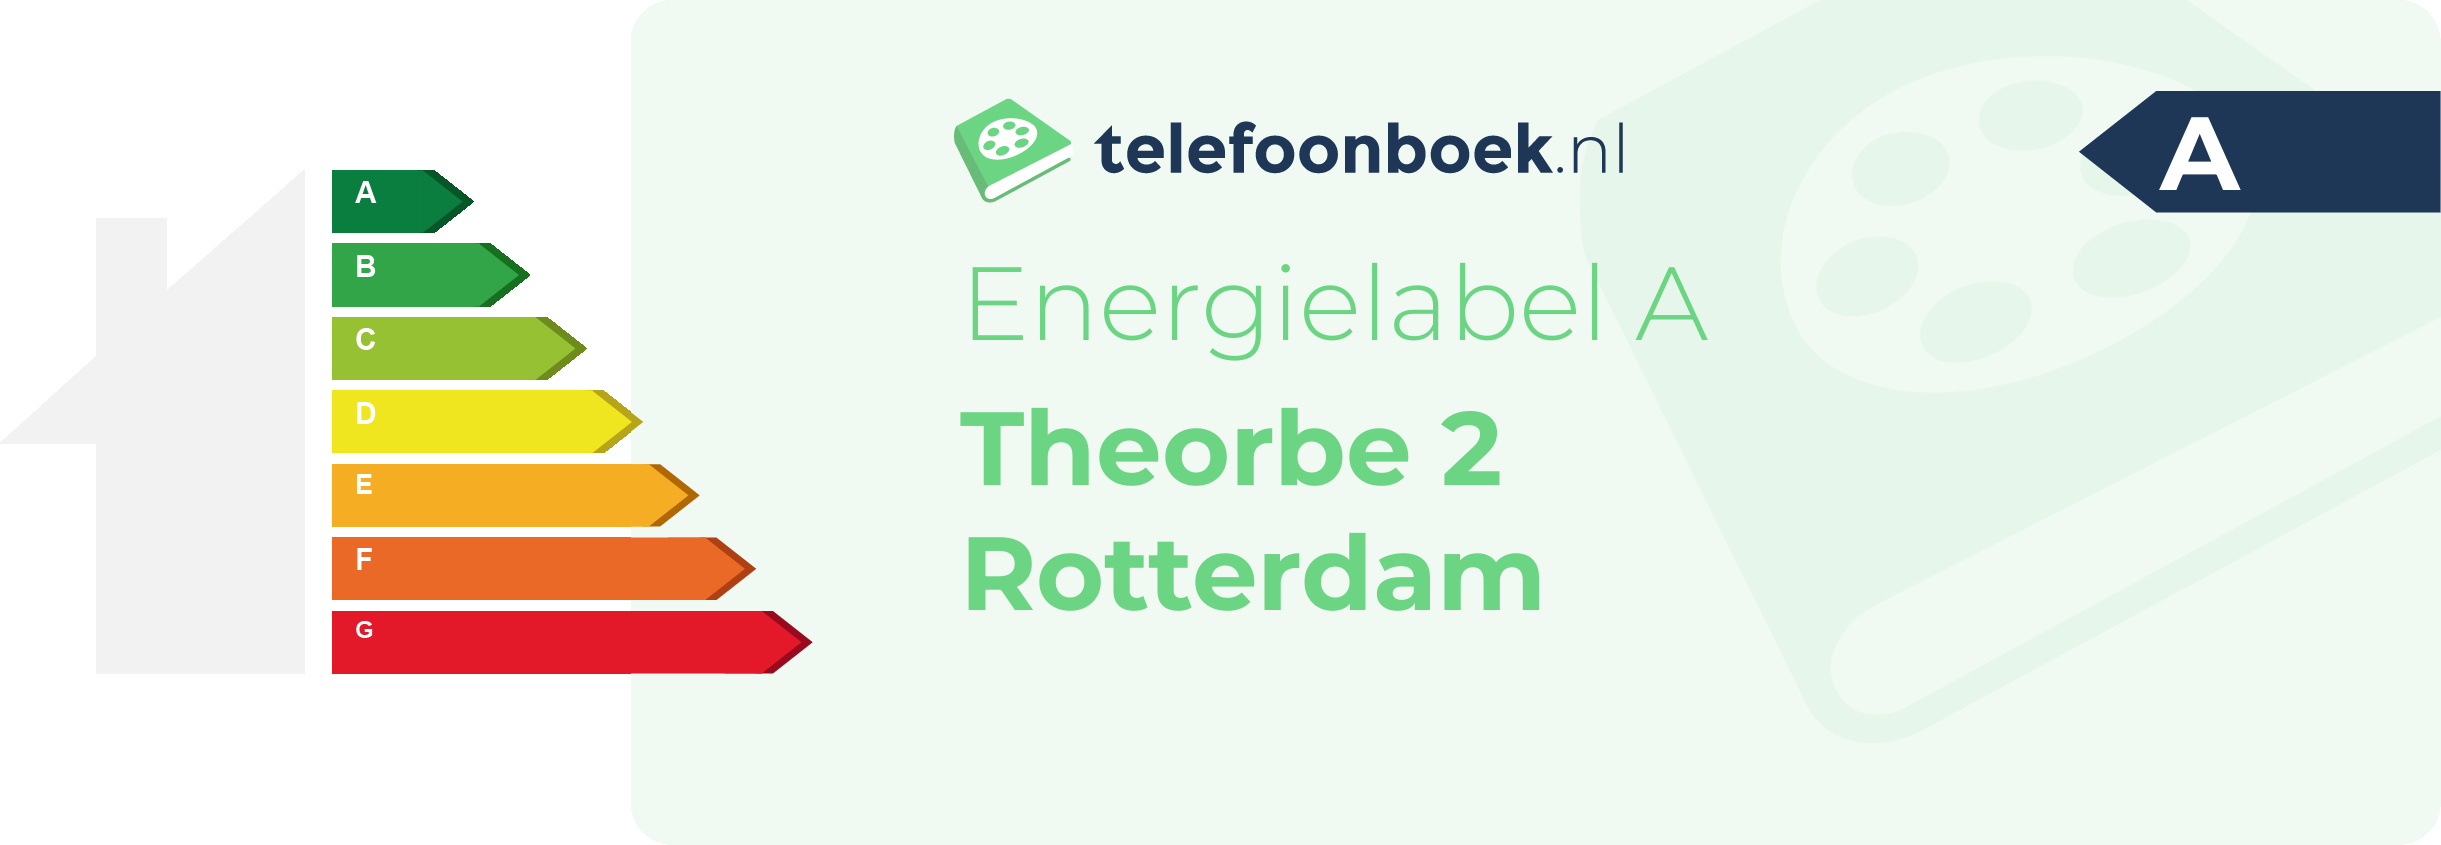 Energielabel Theorbe 2 Rotterdam